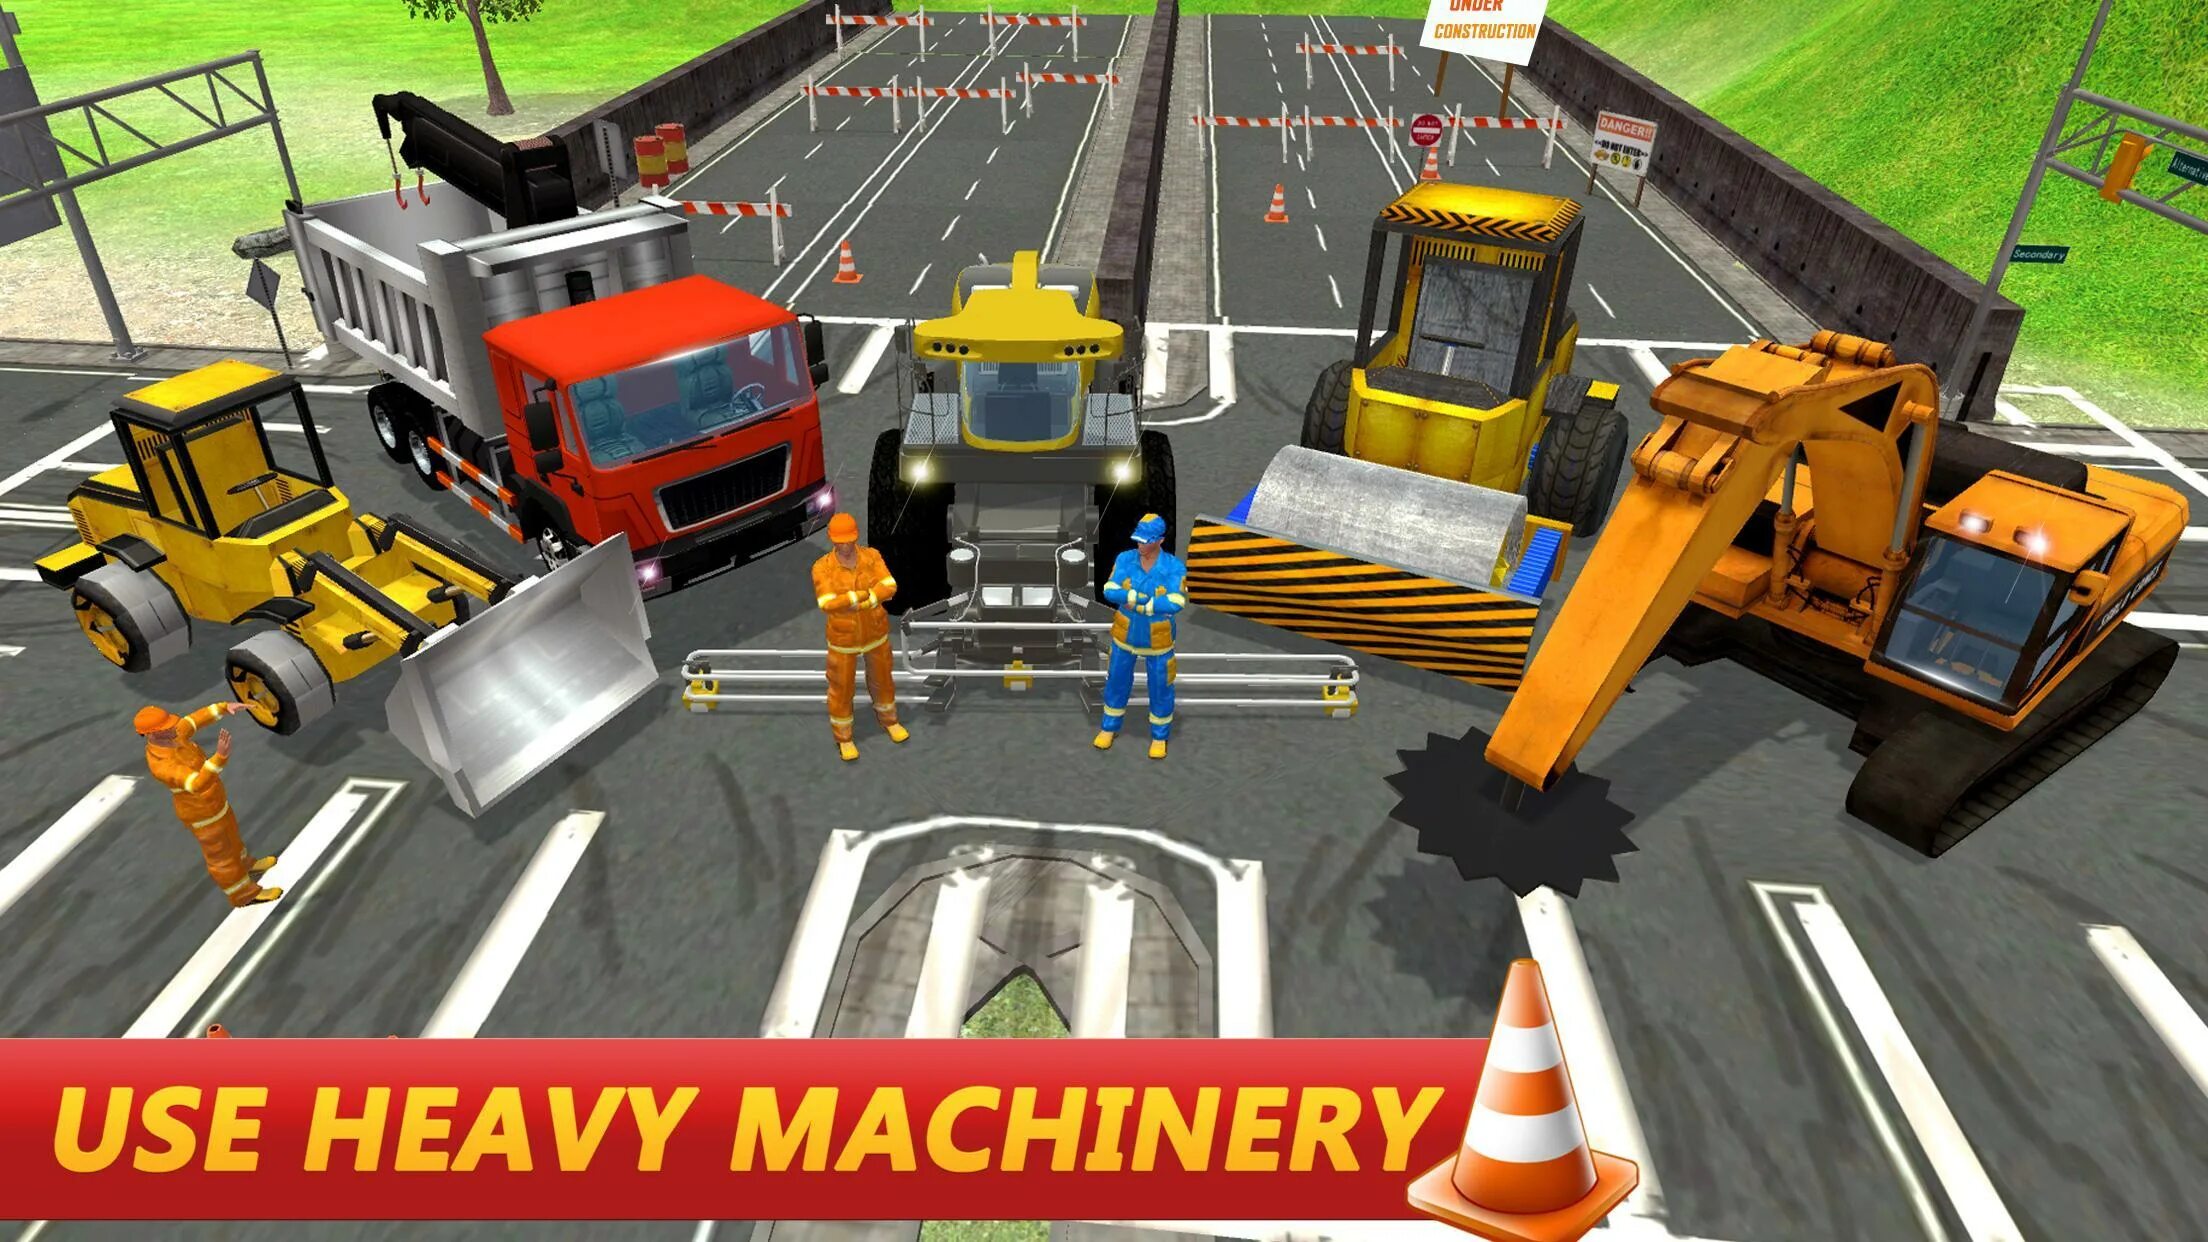 Строительство дорог игра. Игра "стройка". Симулятор дорожного строительства. Симулятор строительных машин. Игра строительные машины.